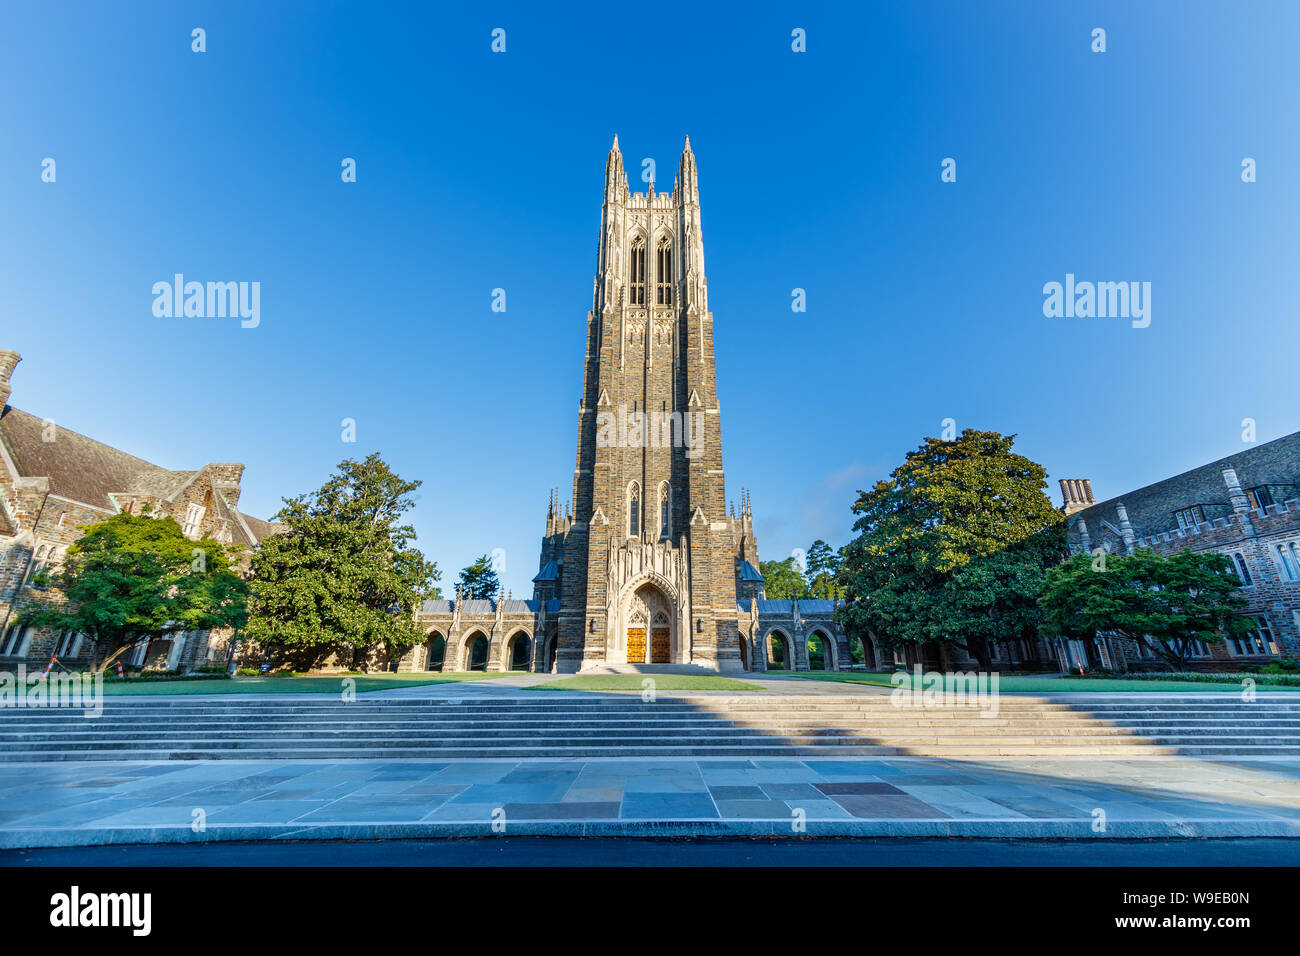 DURHAM, NC, USA - AUGUST 8: Duke University Chapel on August 8, 2019 at Duke University in Durham, North Carolina. Stock Photo